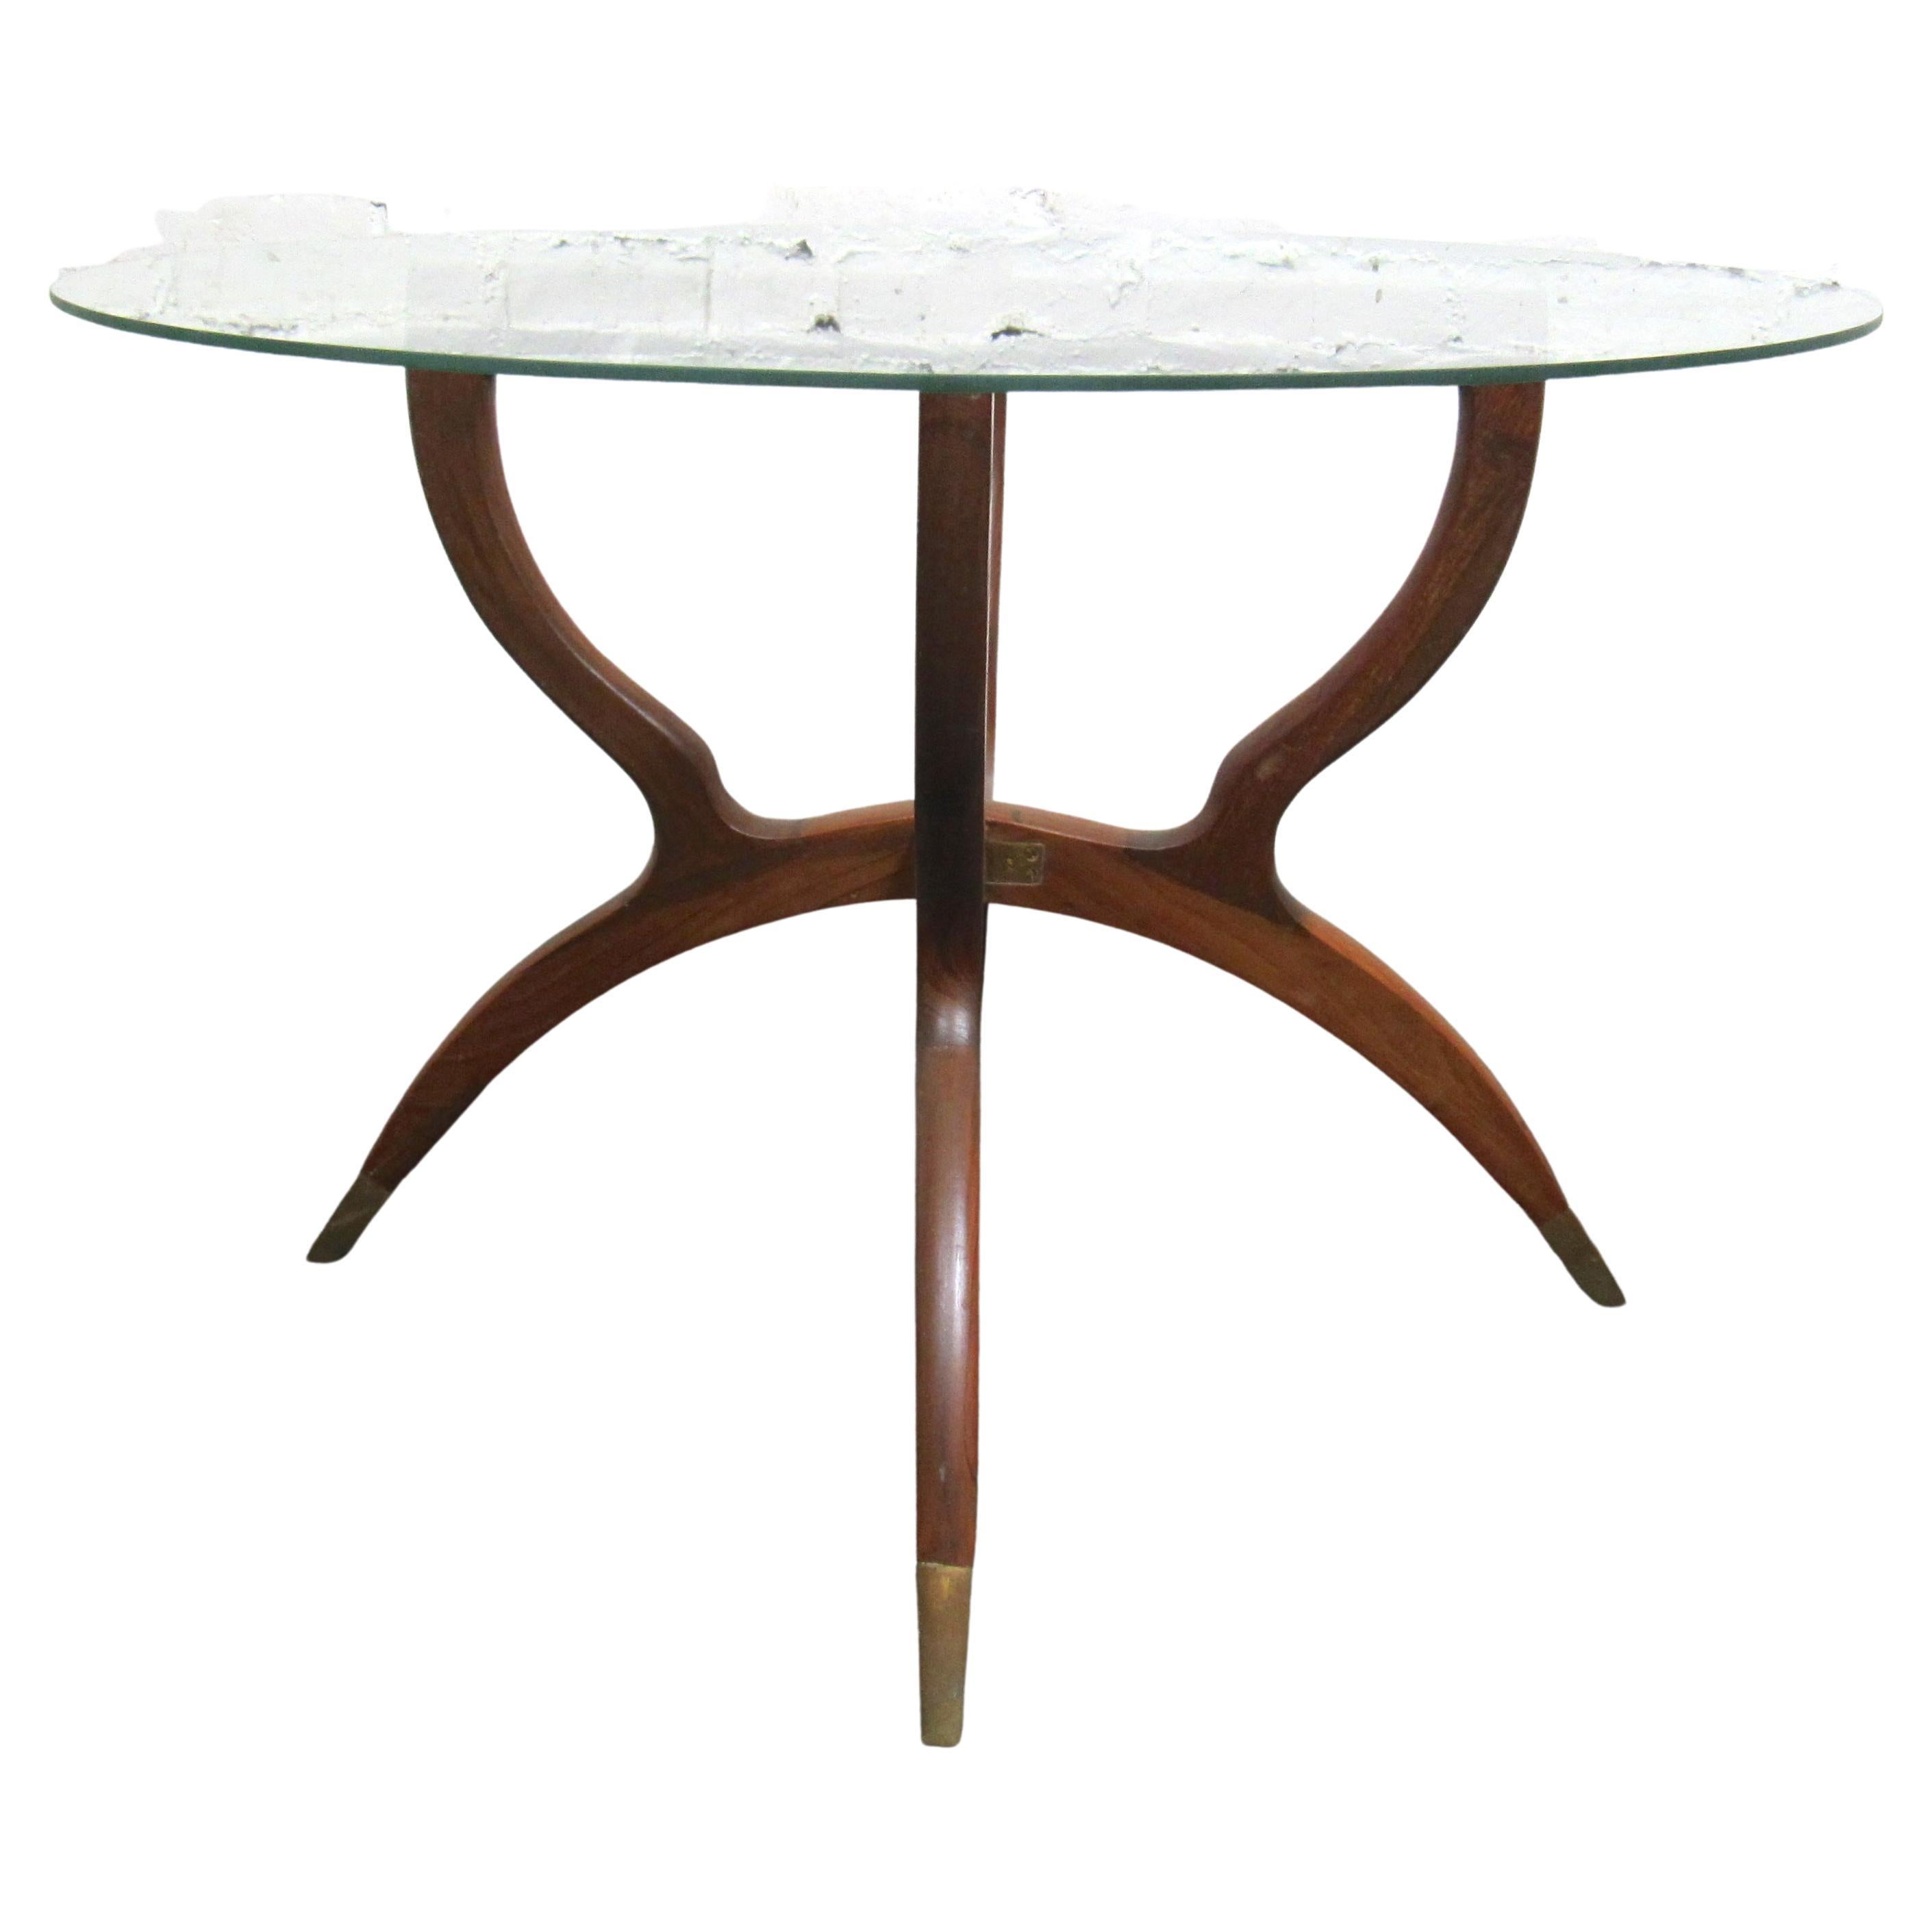 Table basse en verre avec base en bois pliable